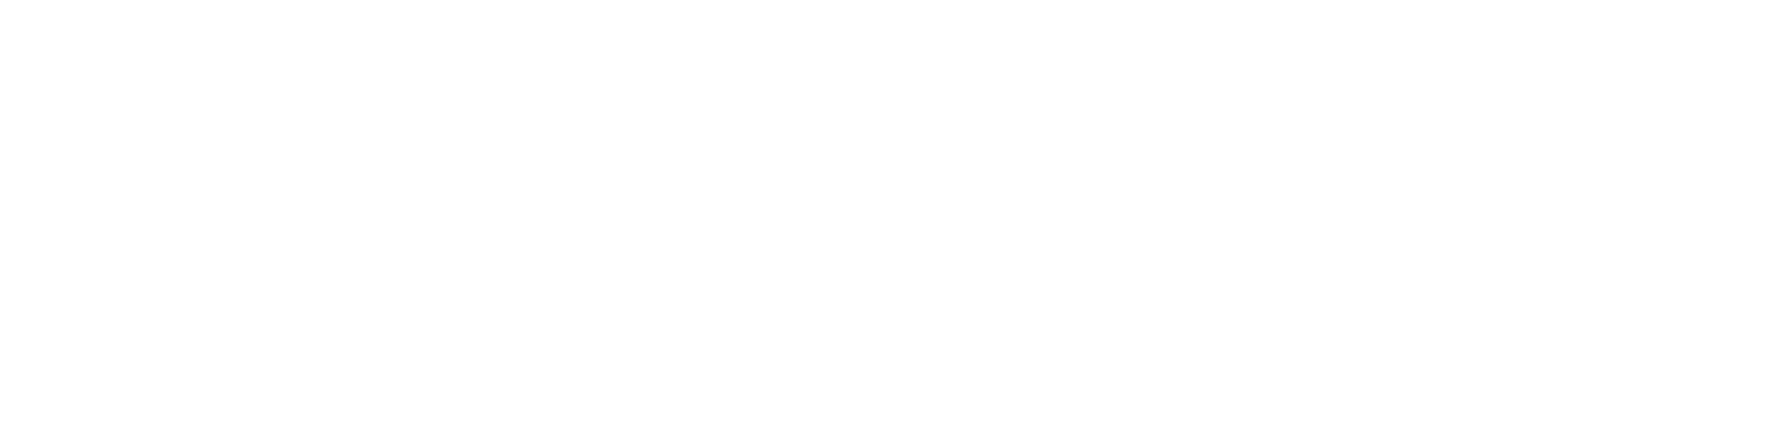 CONGRATULATIONS TO OUR 2022 CHAMPION KEEGAN BRADLEY